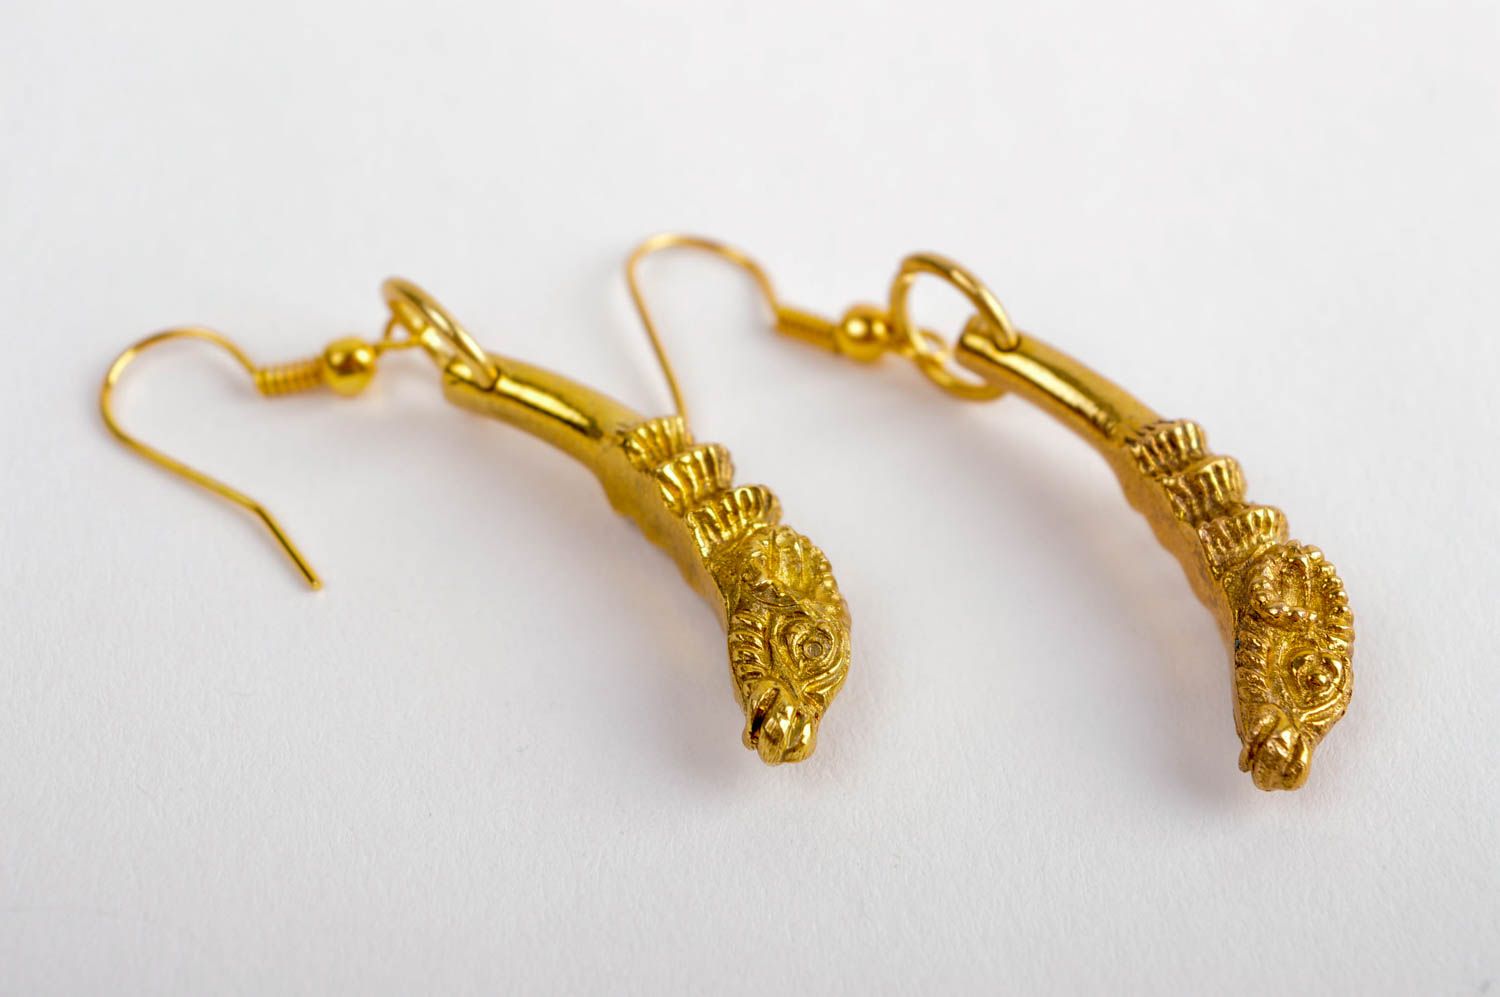 Handmade metal earrings cool earrings design fashion accessories for girls photo 5